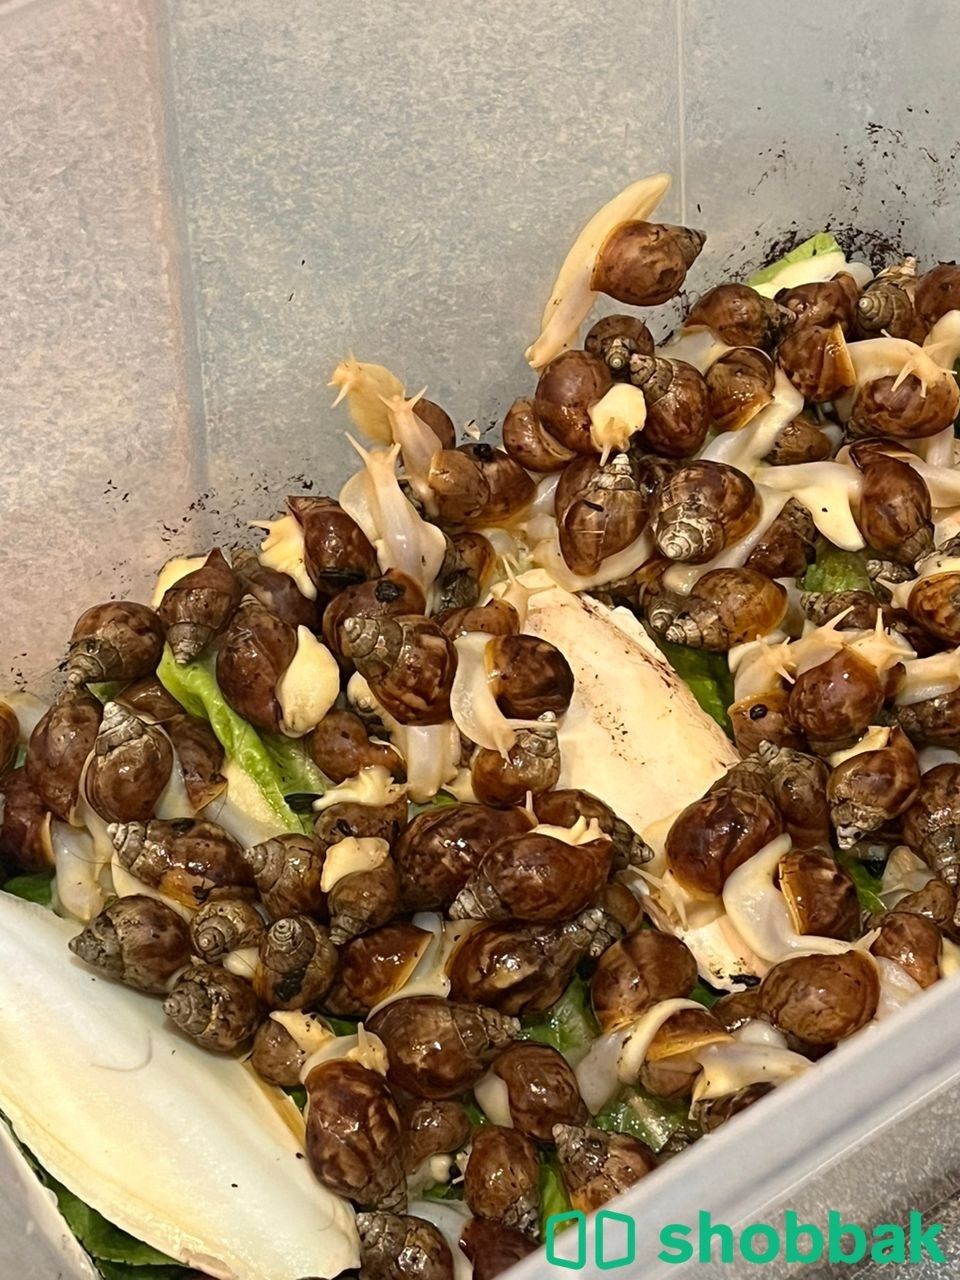 حلزون افريقي حلزونات Shobbak Saudi Arabia